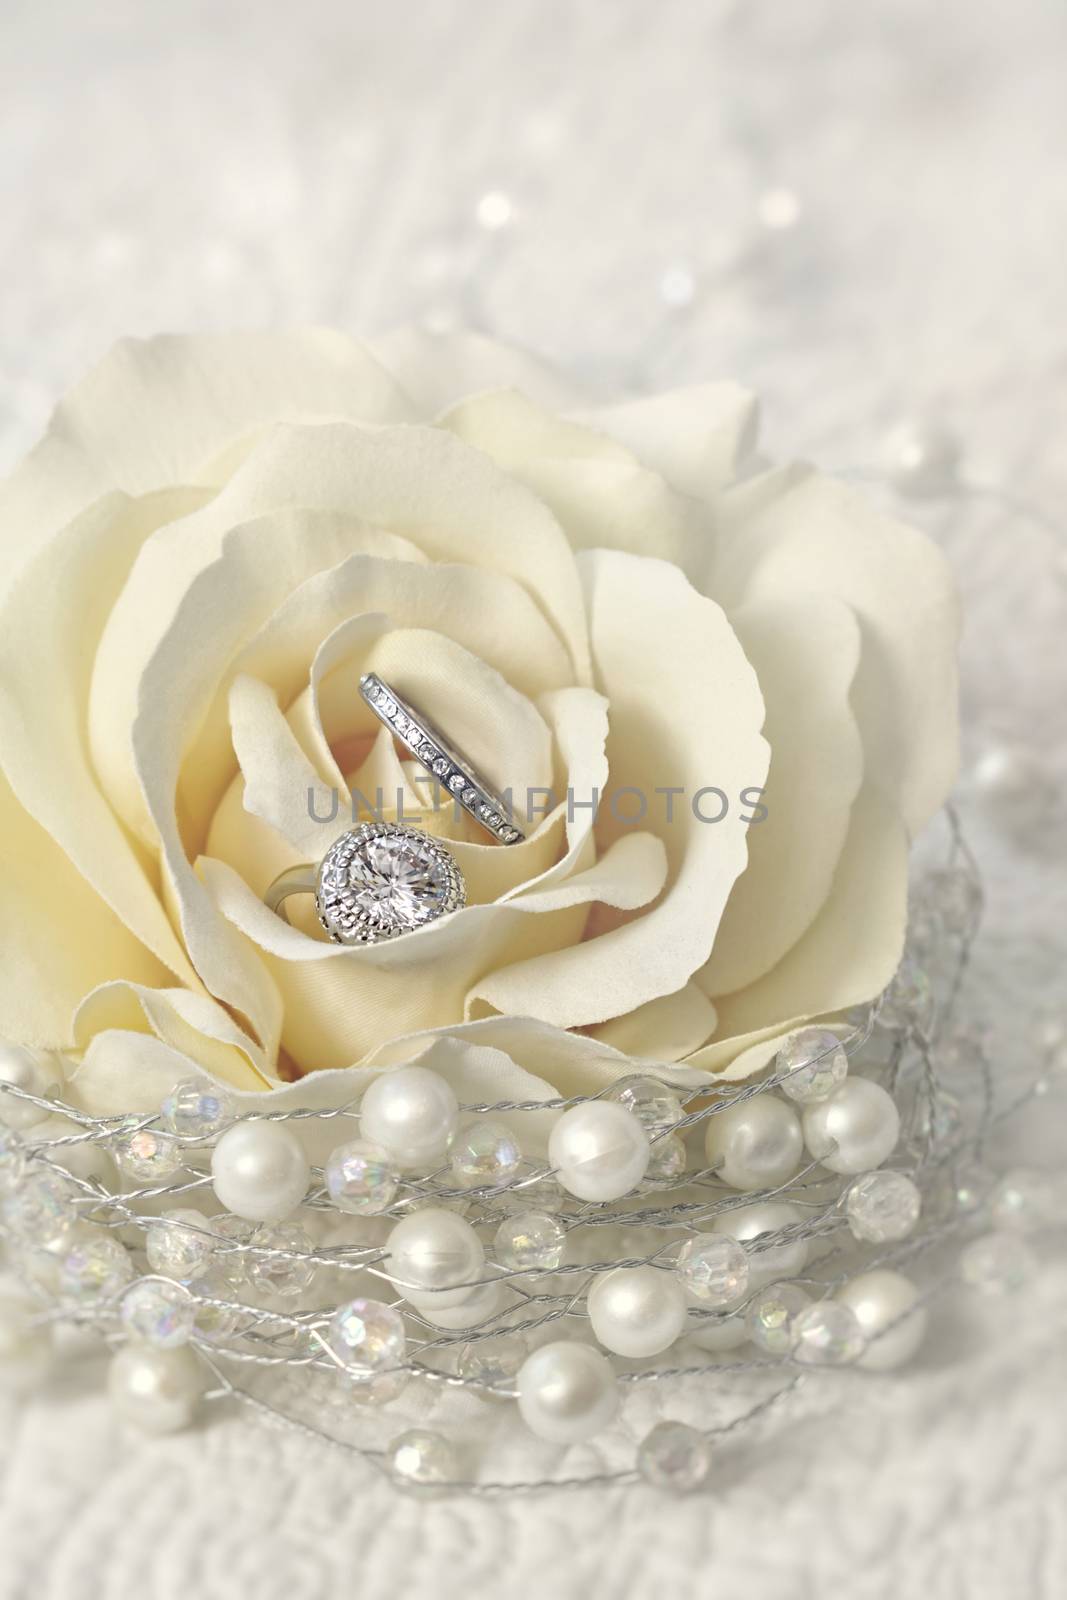 Wedding rings in rose flower by Sandralise